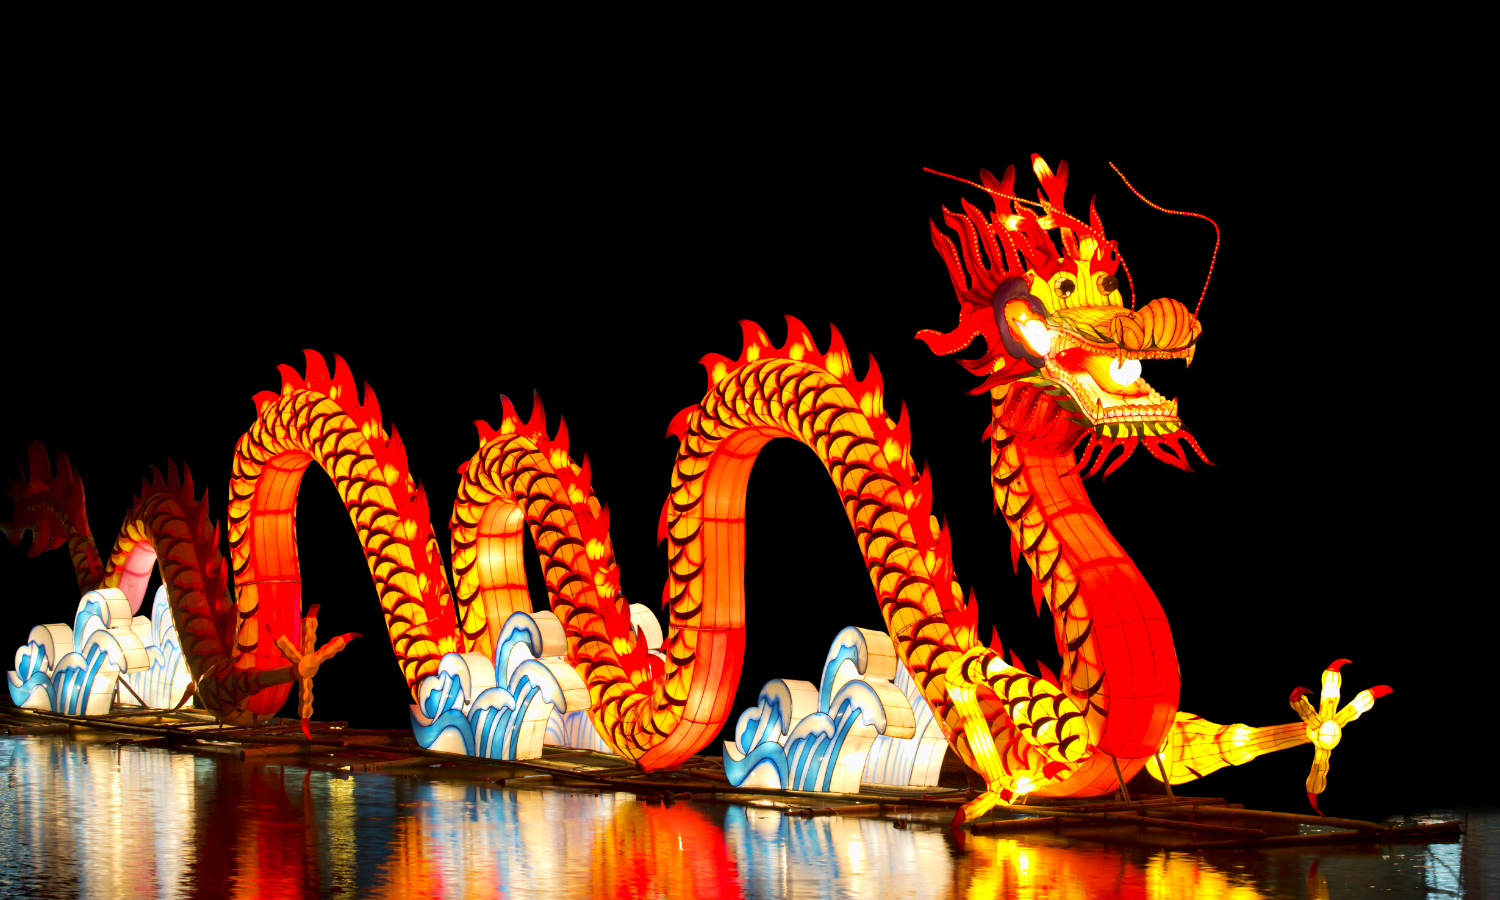 Chinese dragon lit up